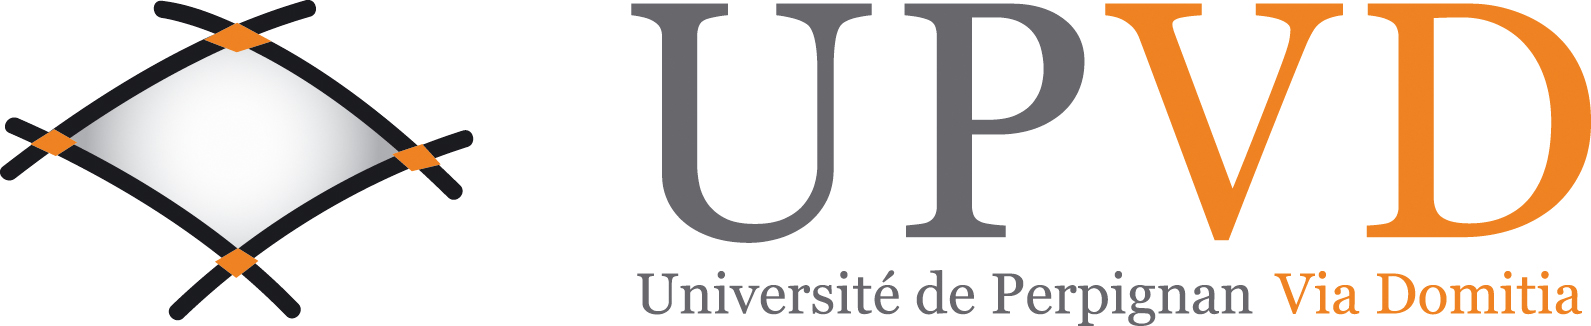 logo upvd